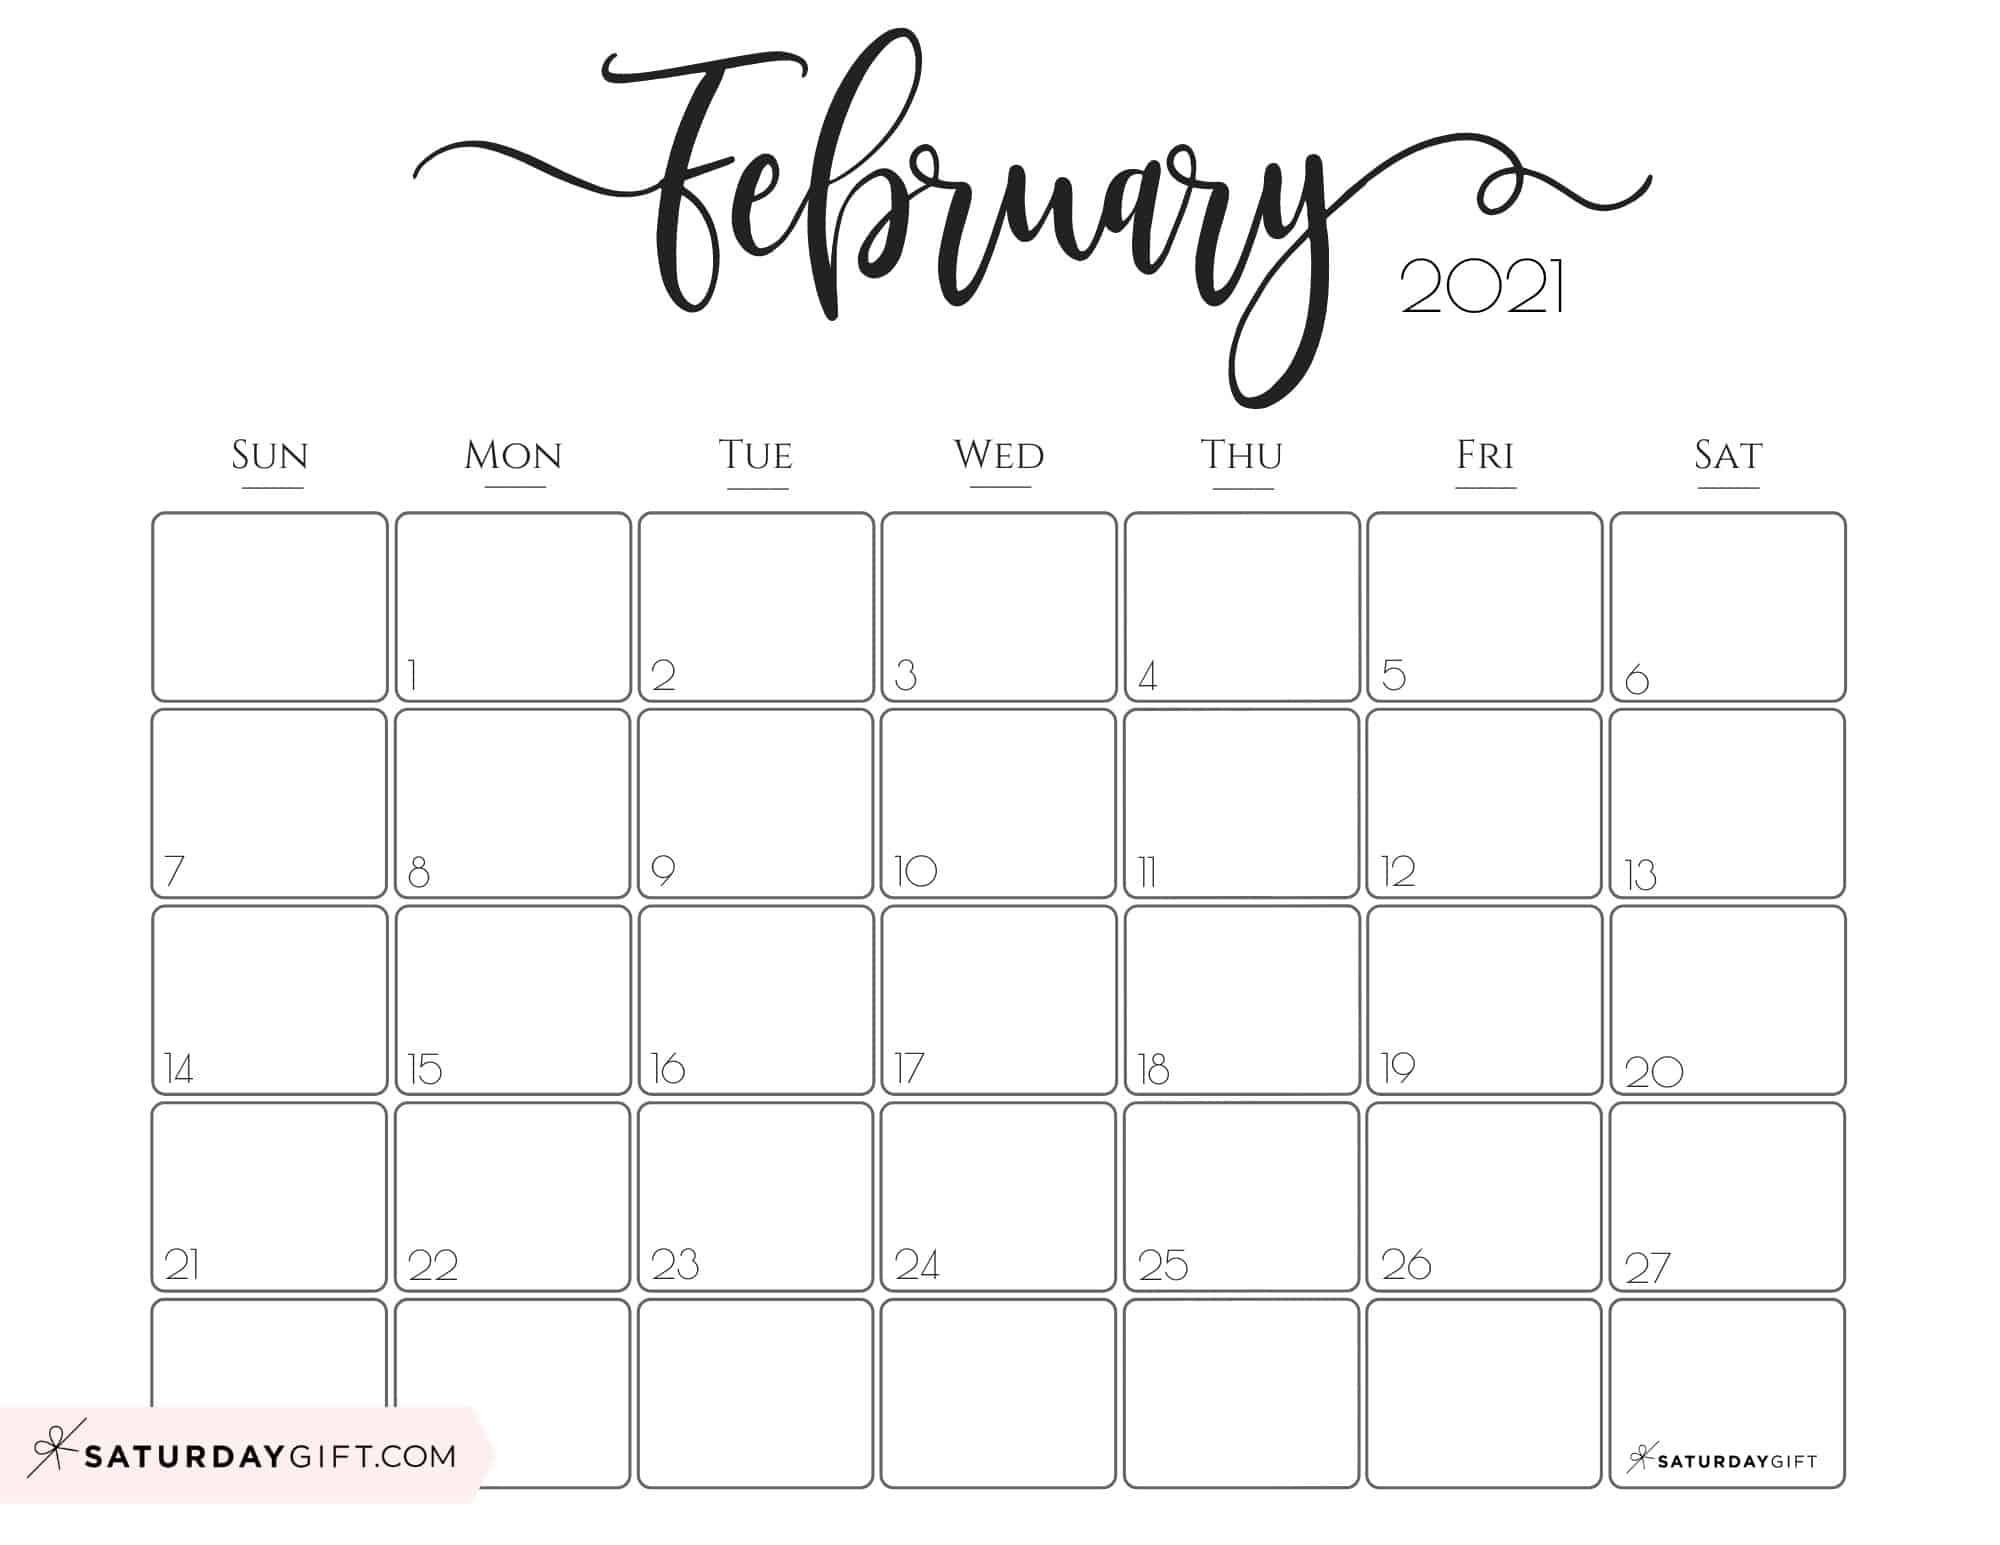 Cute (&amp; Free!) Printable February 2021 Calendar-Billcalendars That Work 2021